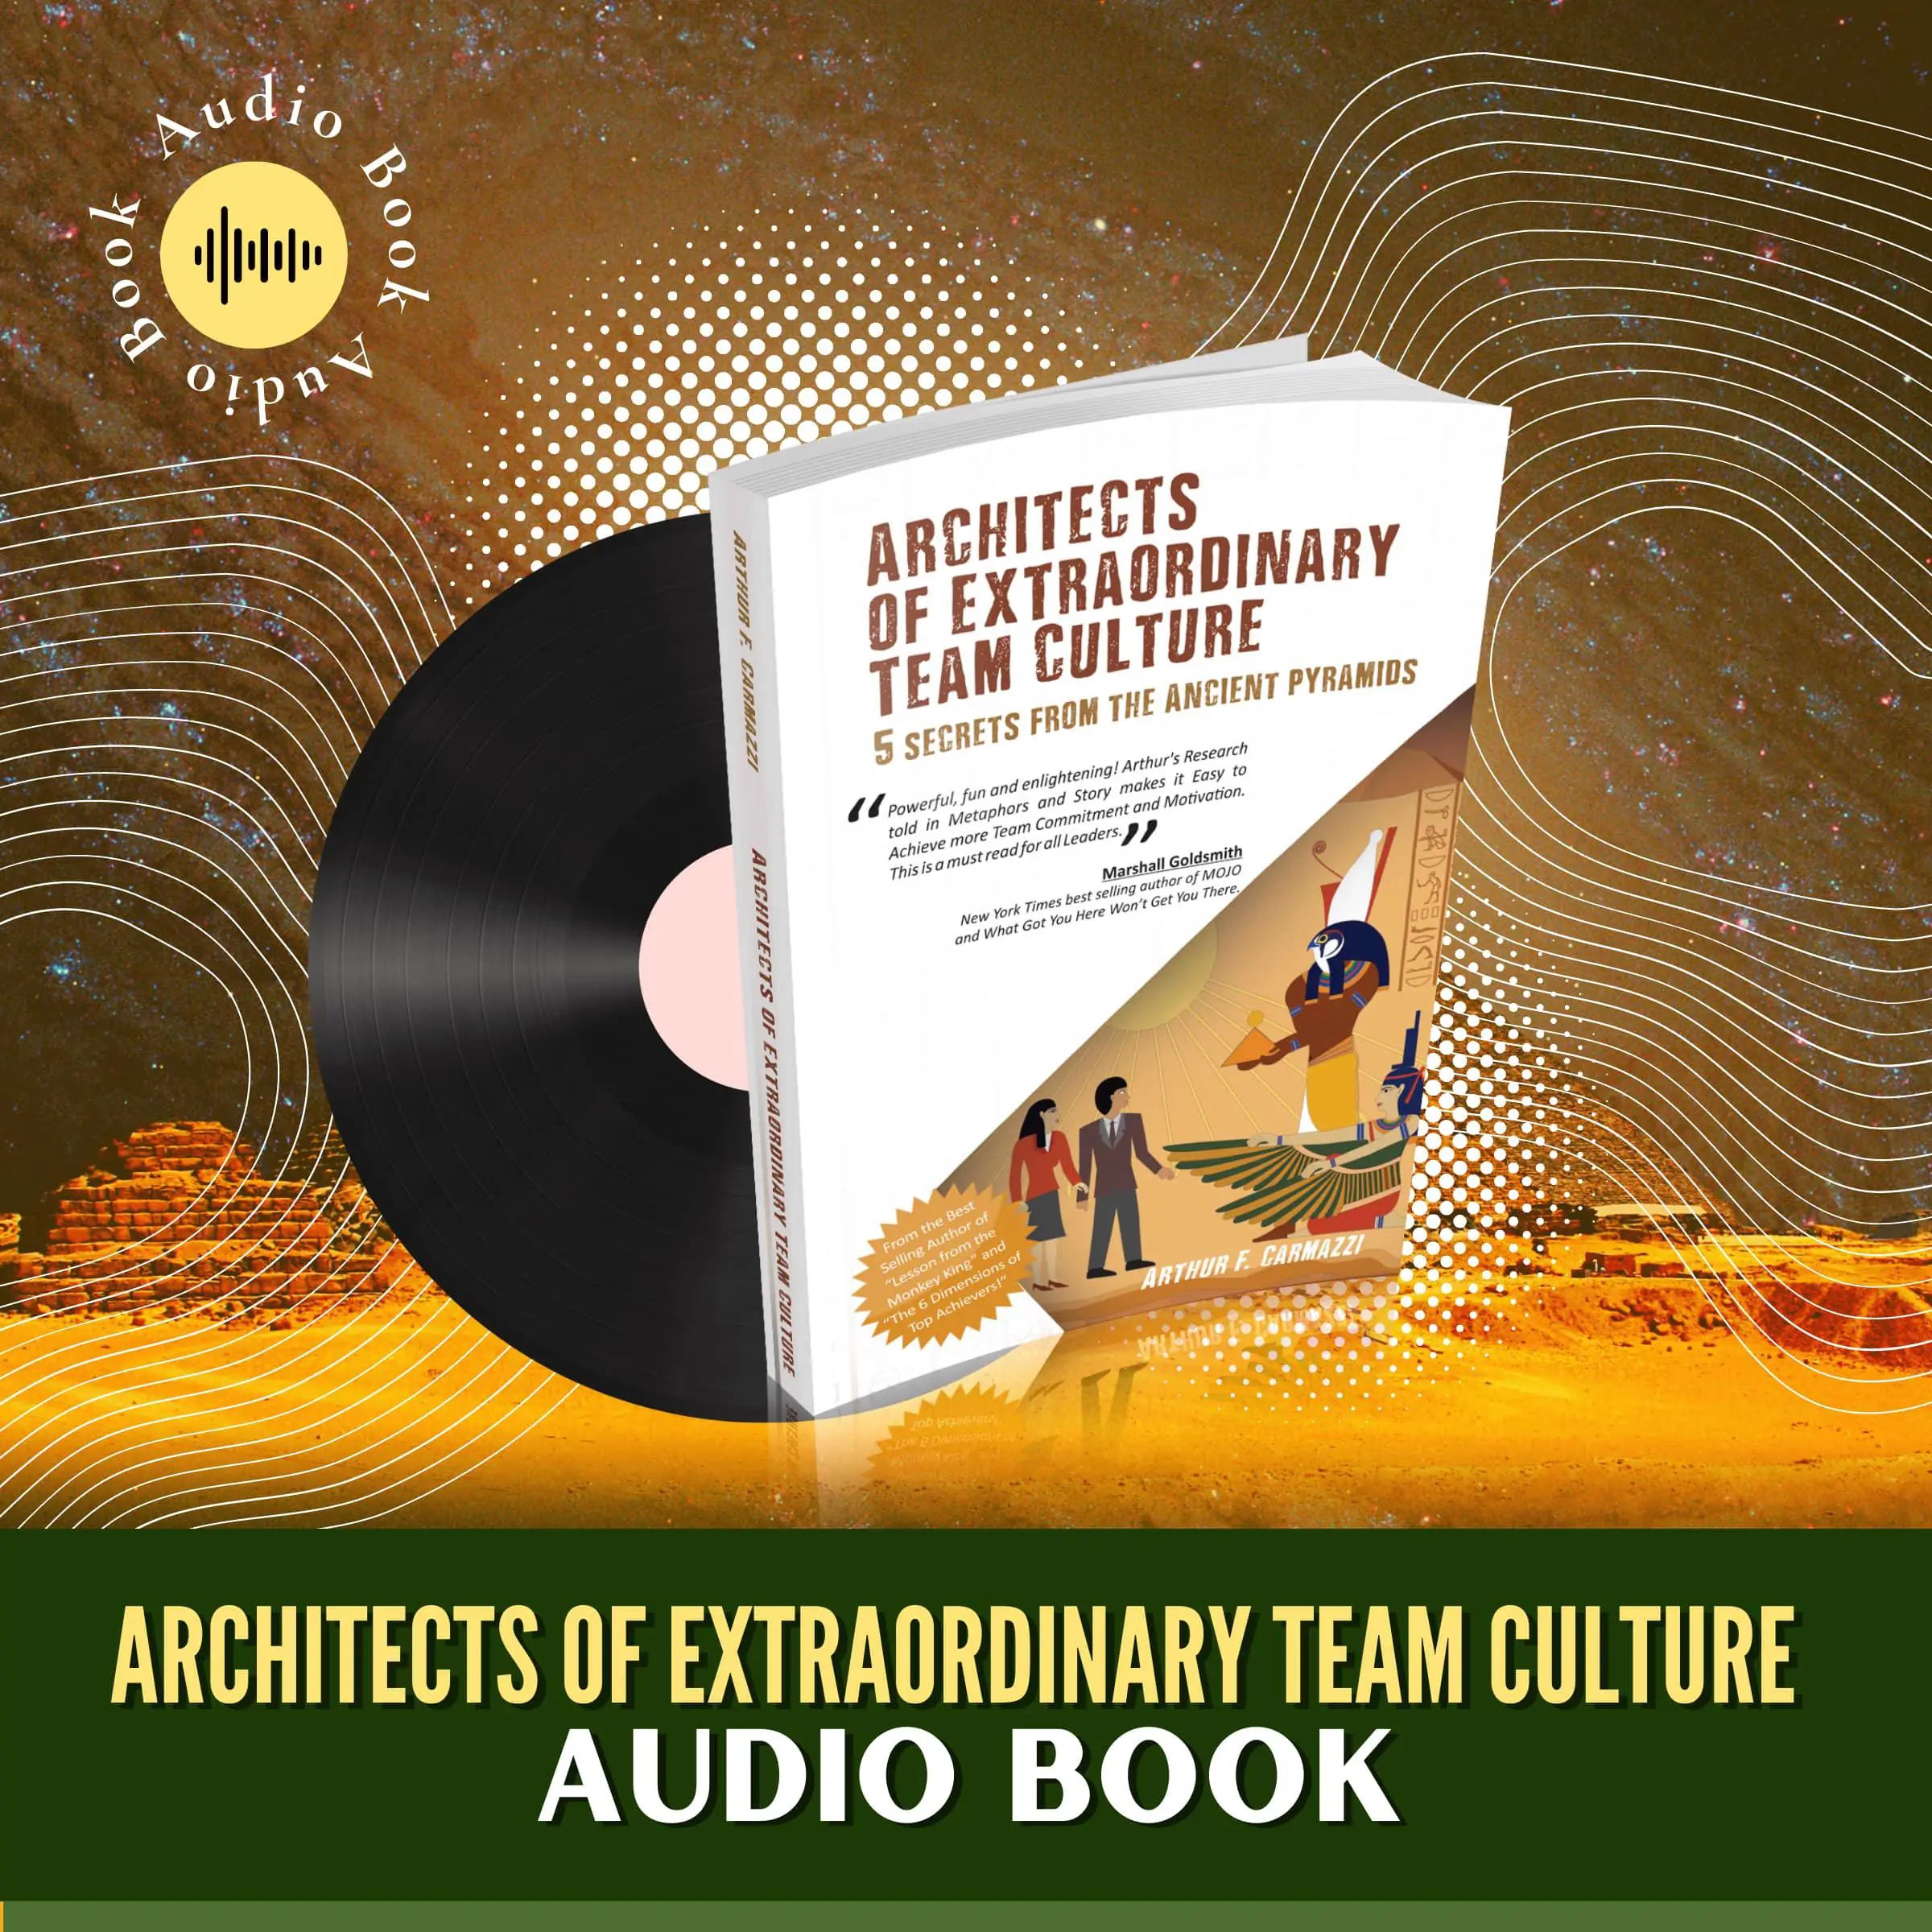 Architects of Extraordinary Team Culture Audiobook by Arthur Carmazzi